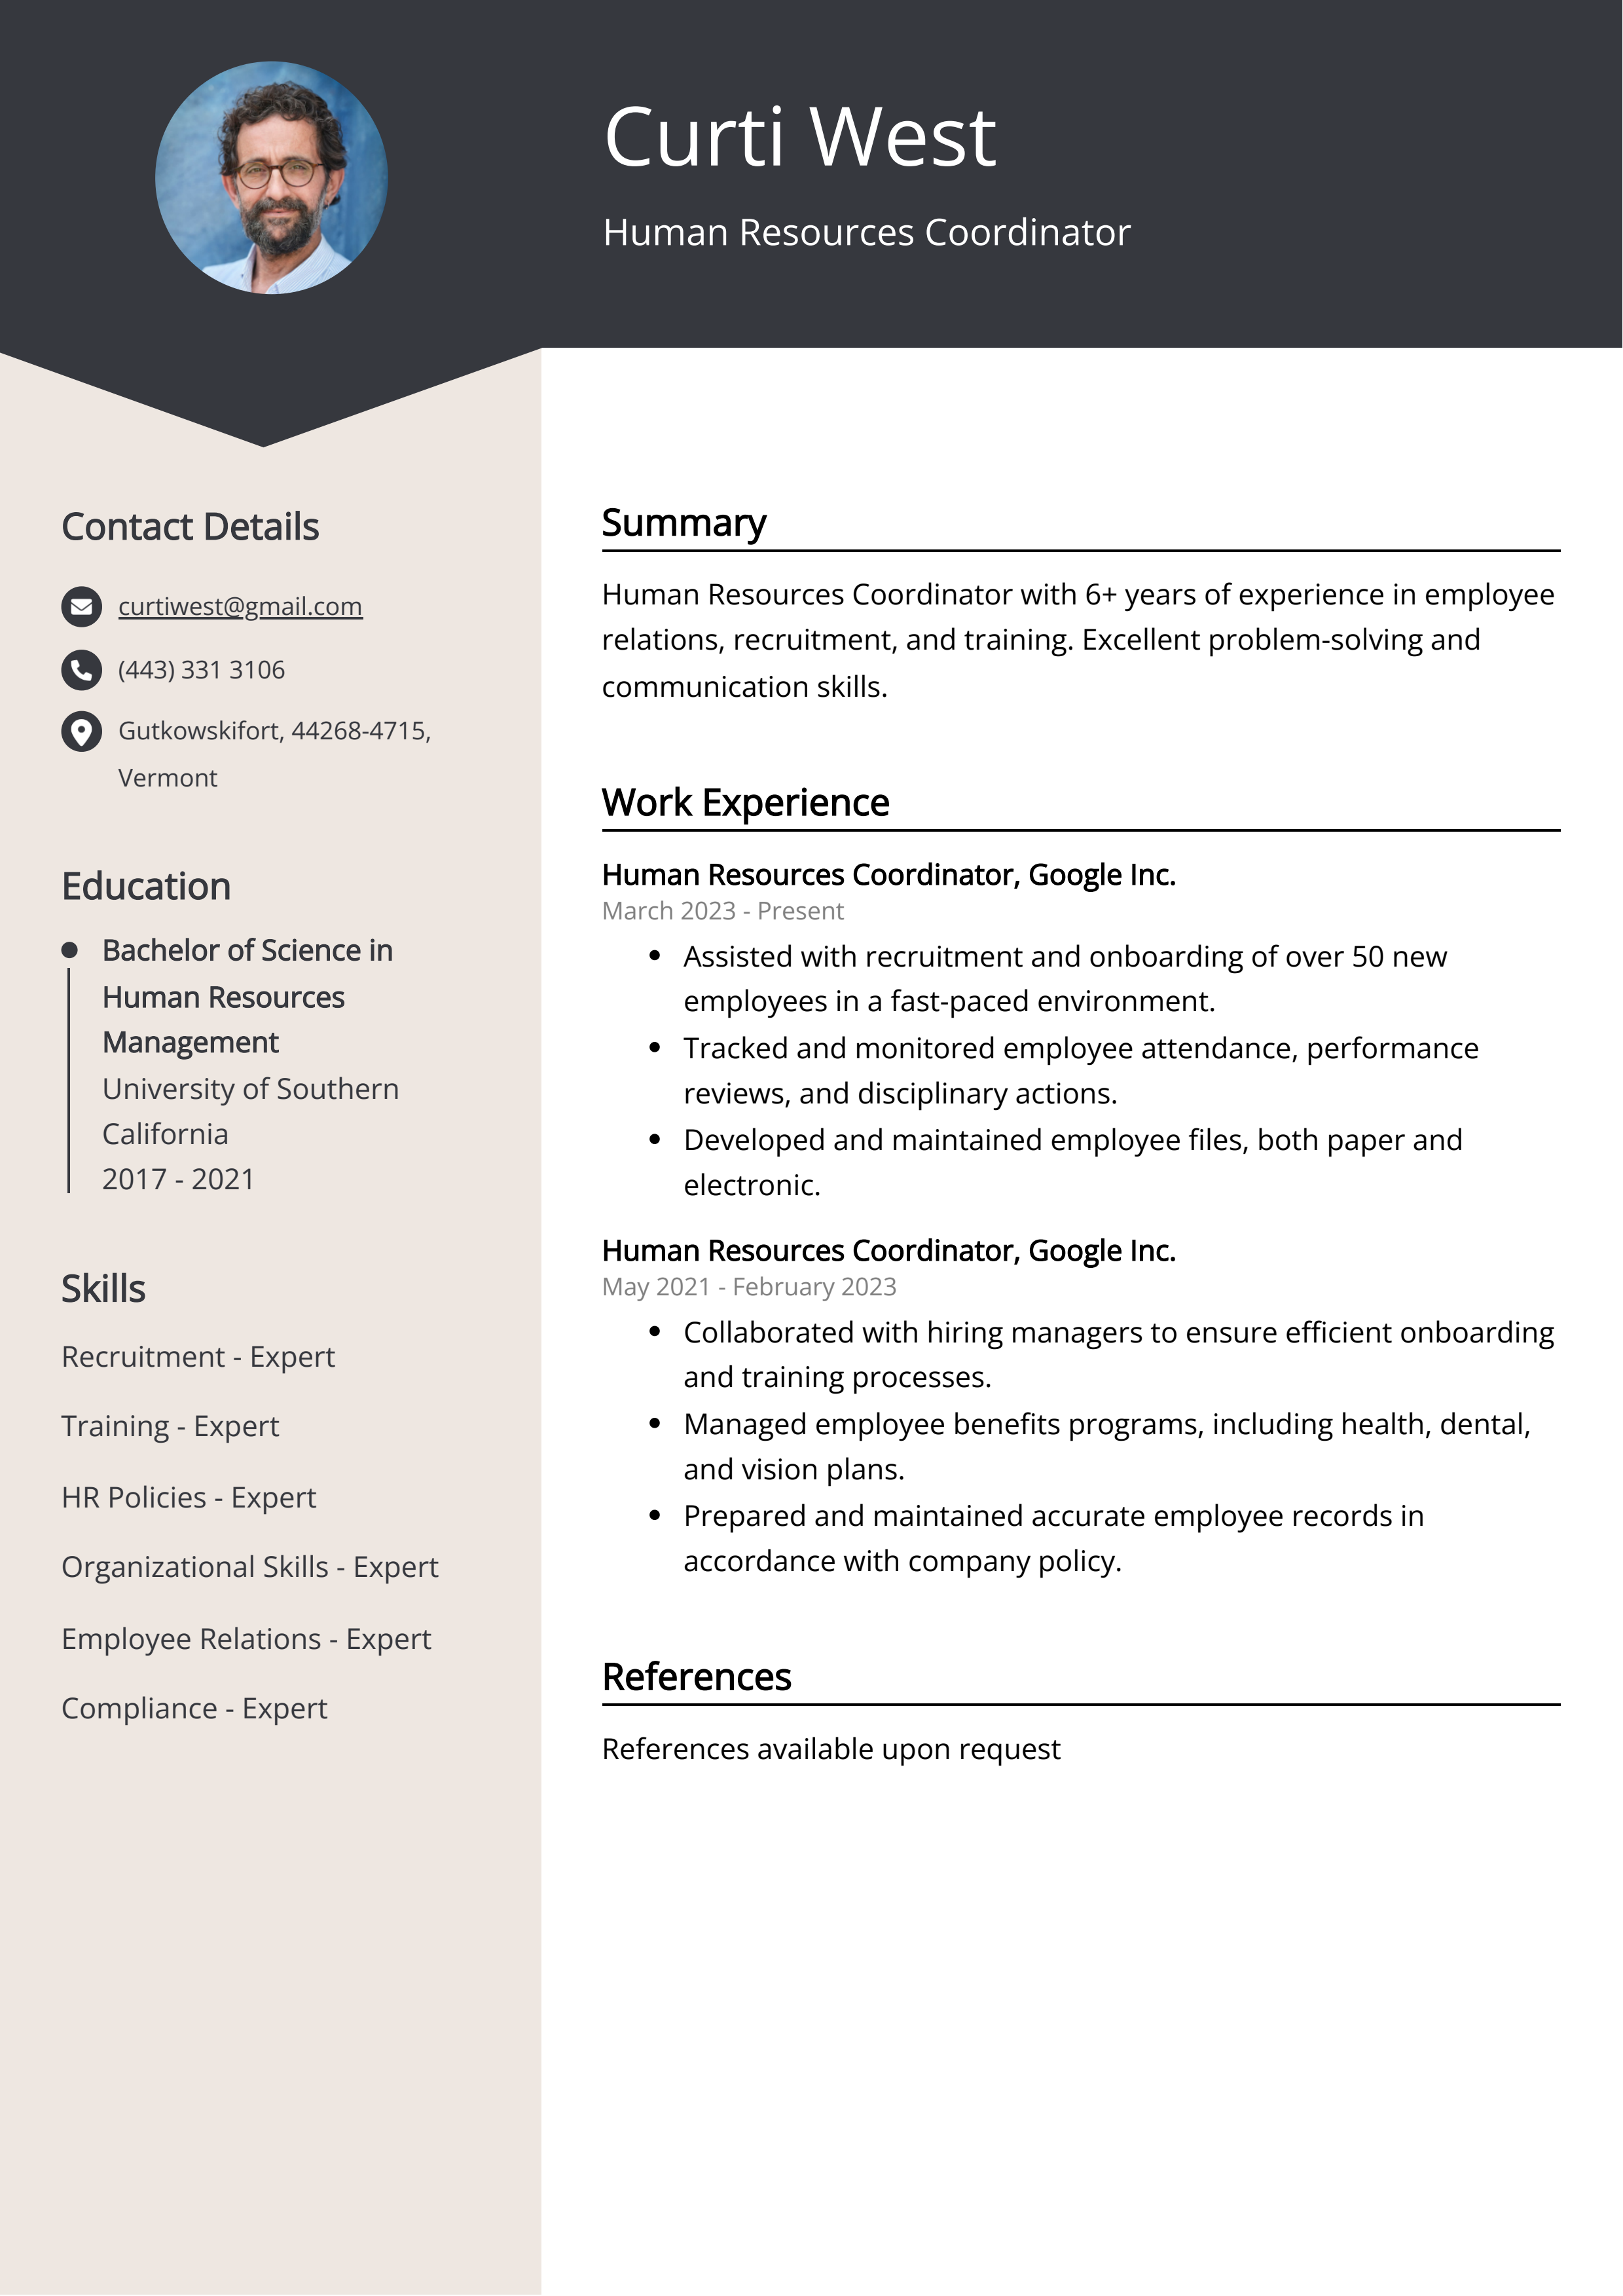 Human Resources Coordinator CV Example